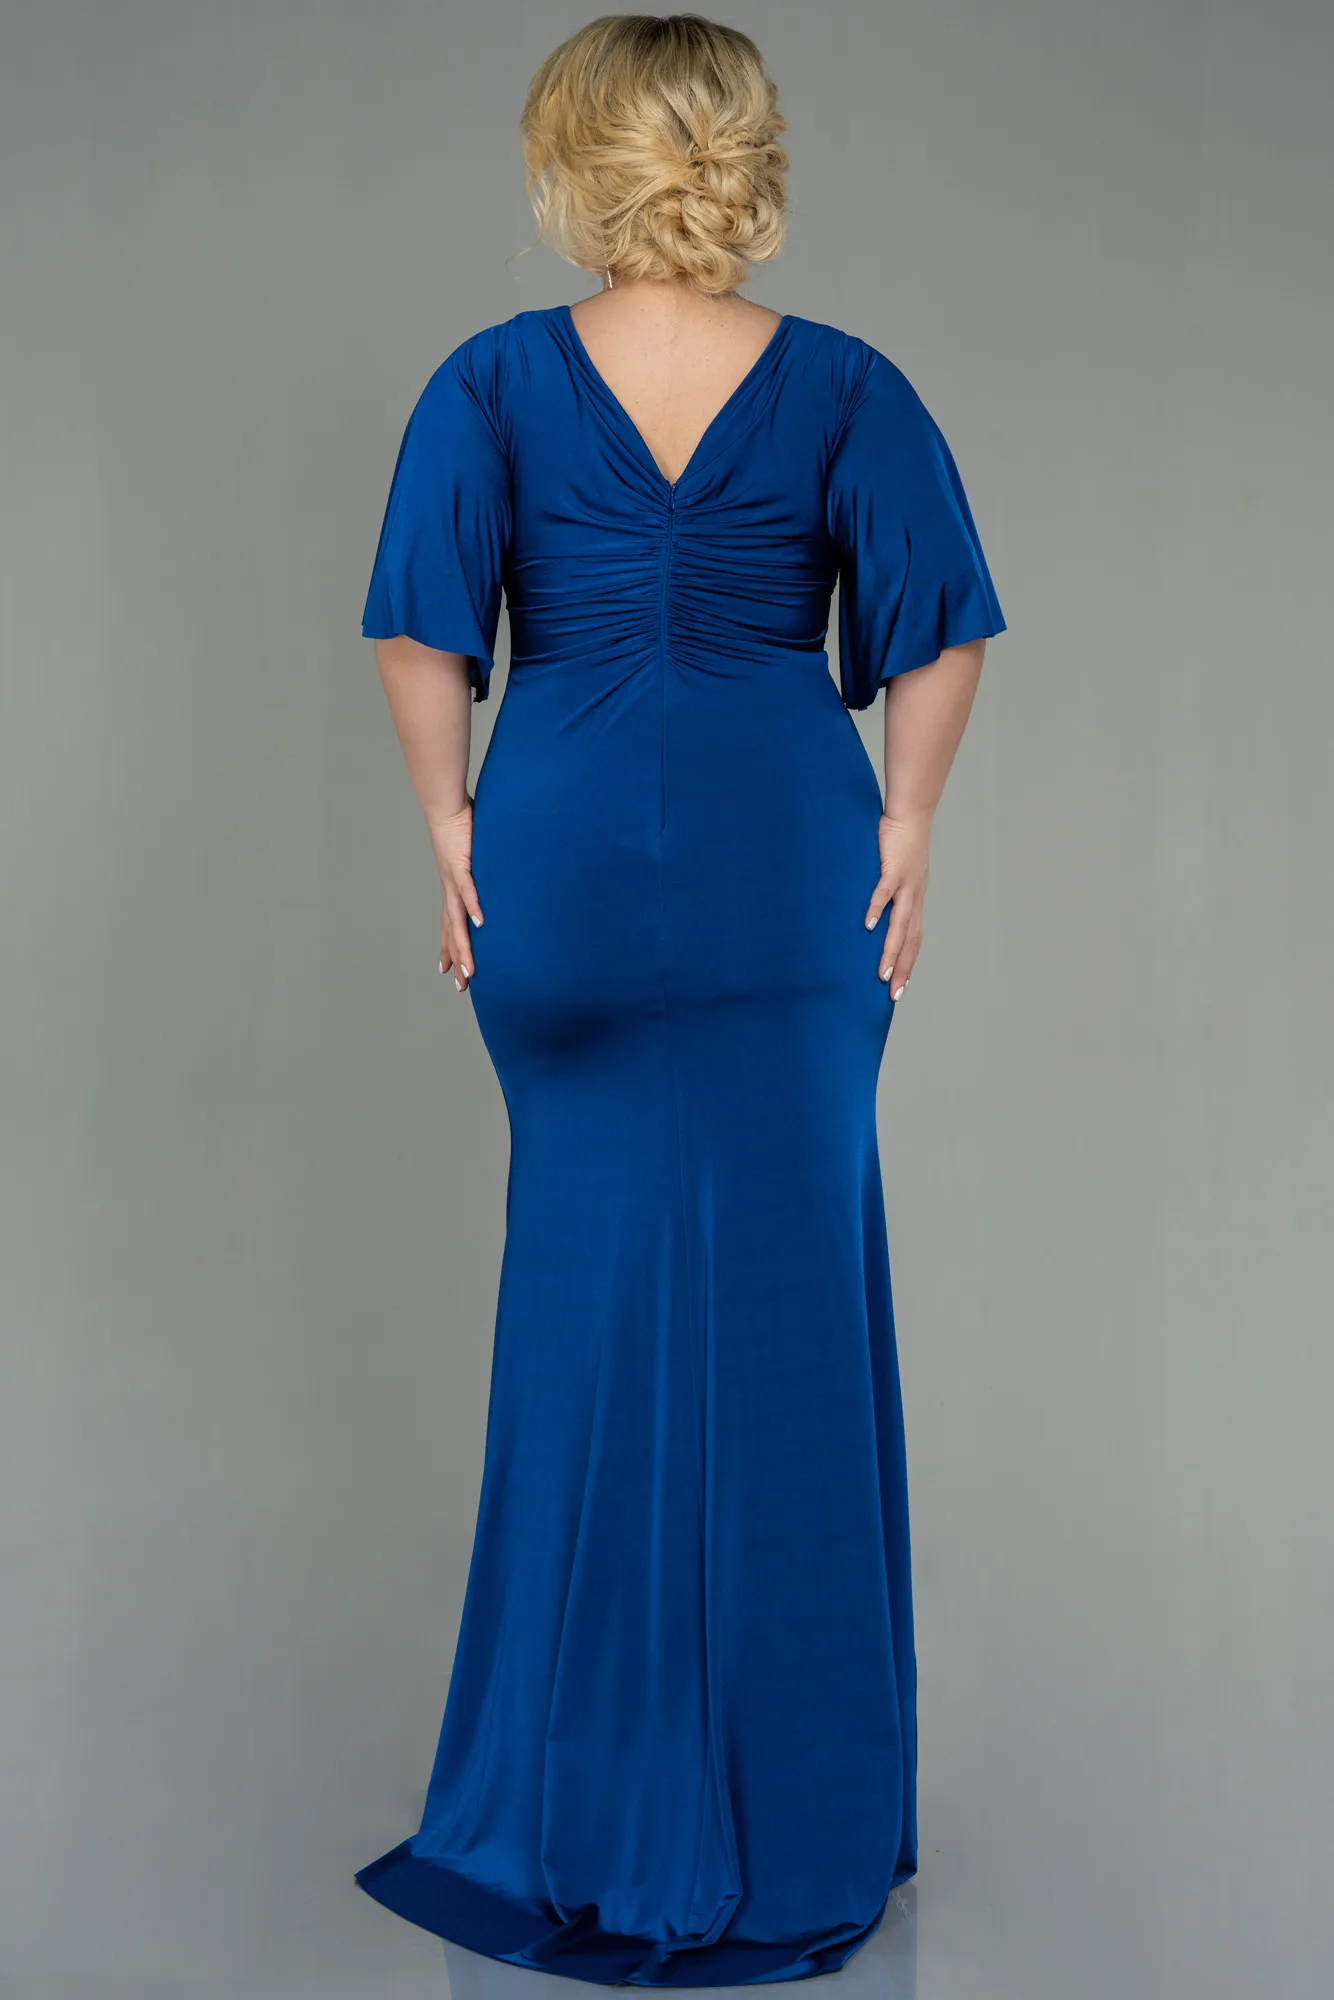 Sax Blue-Long Plus Size Evening Dress ABU3015